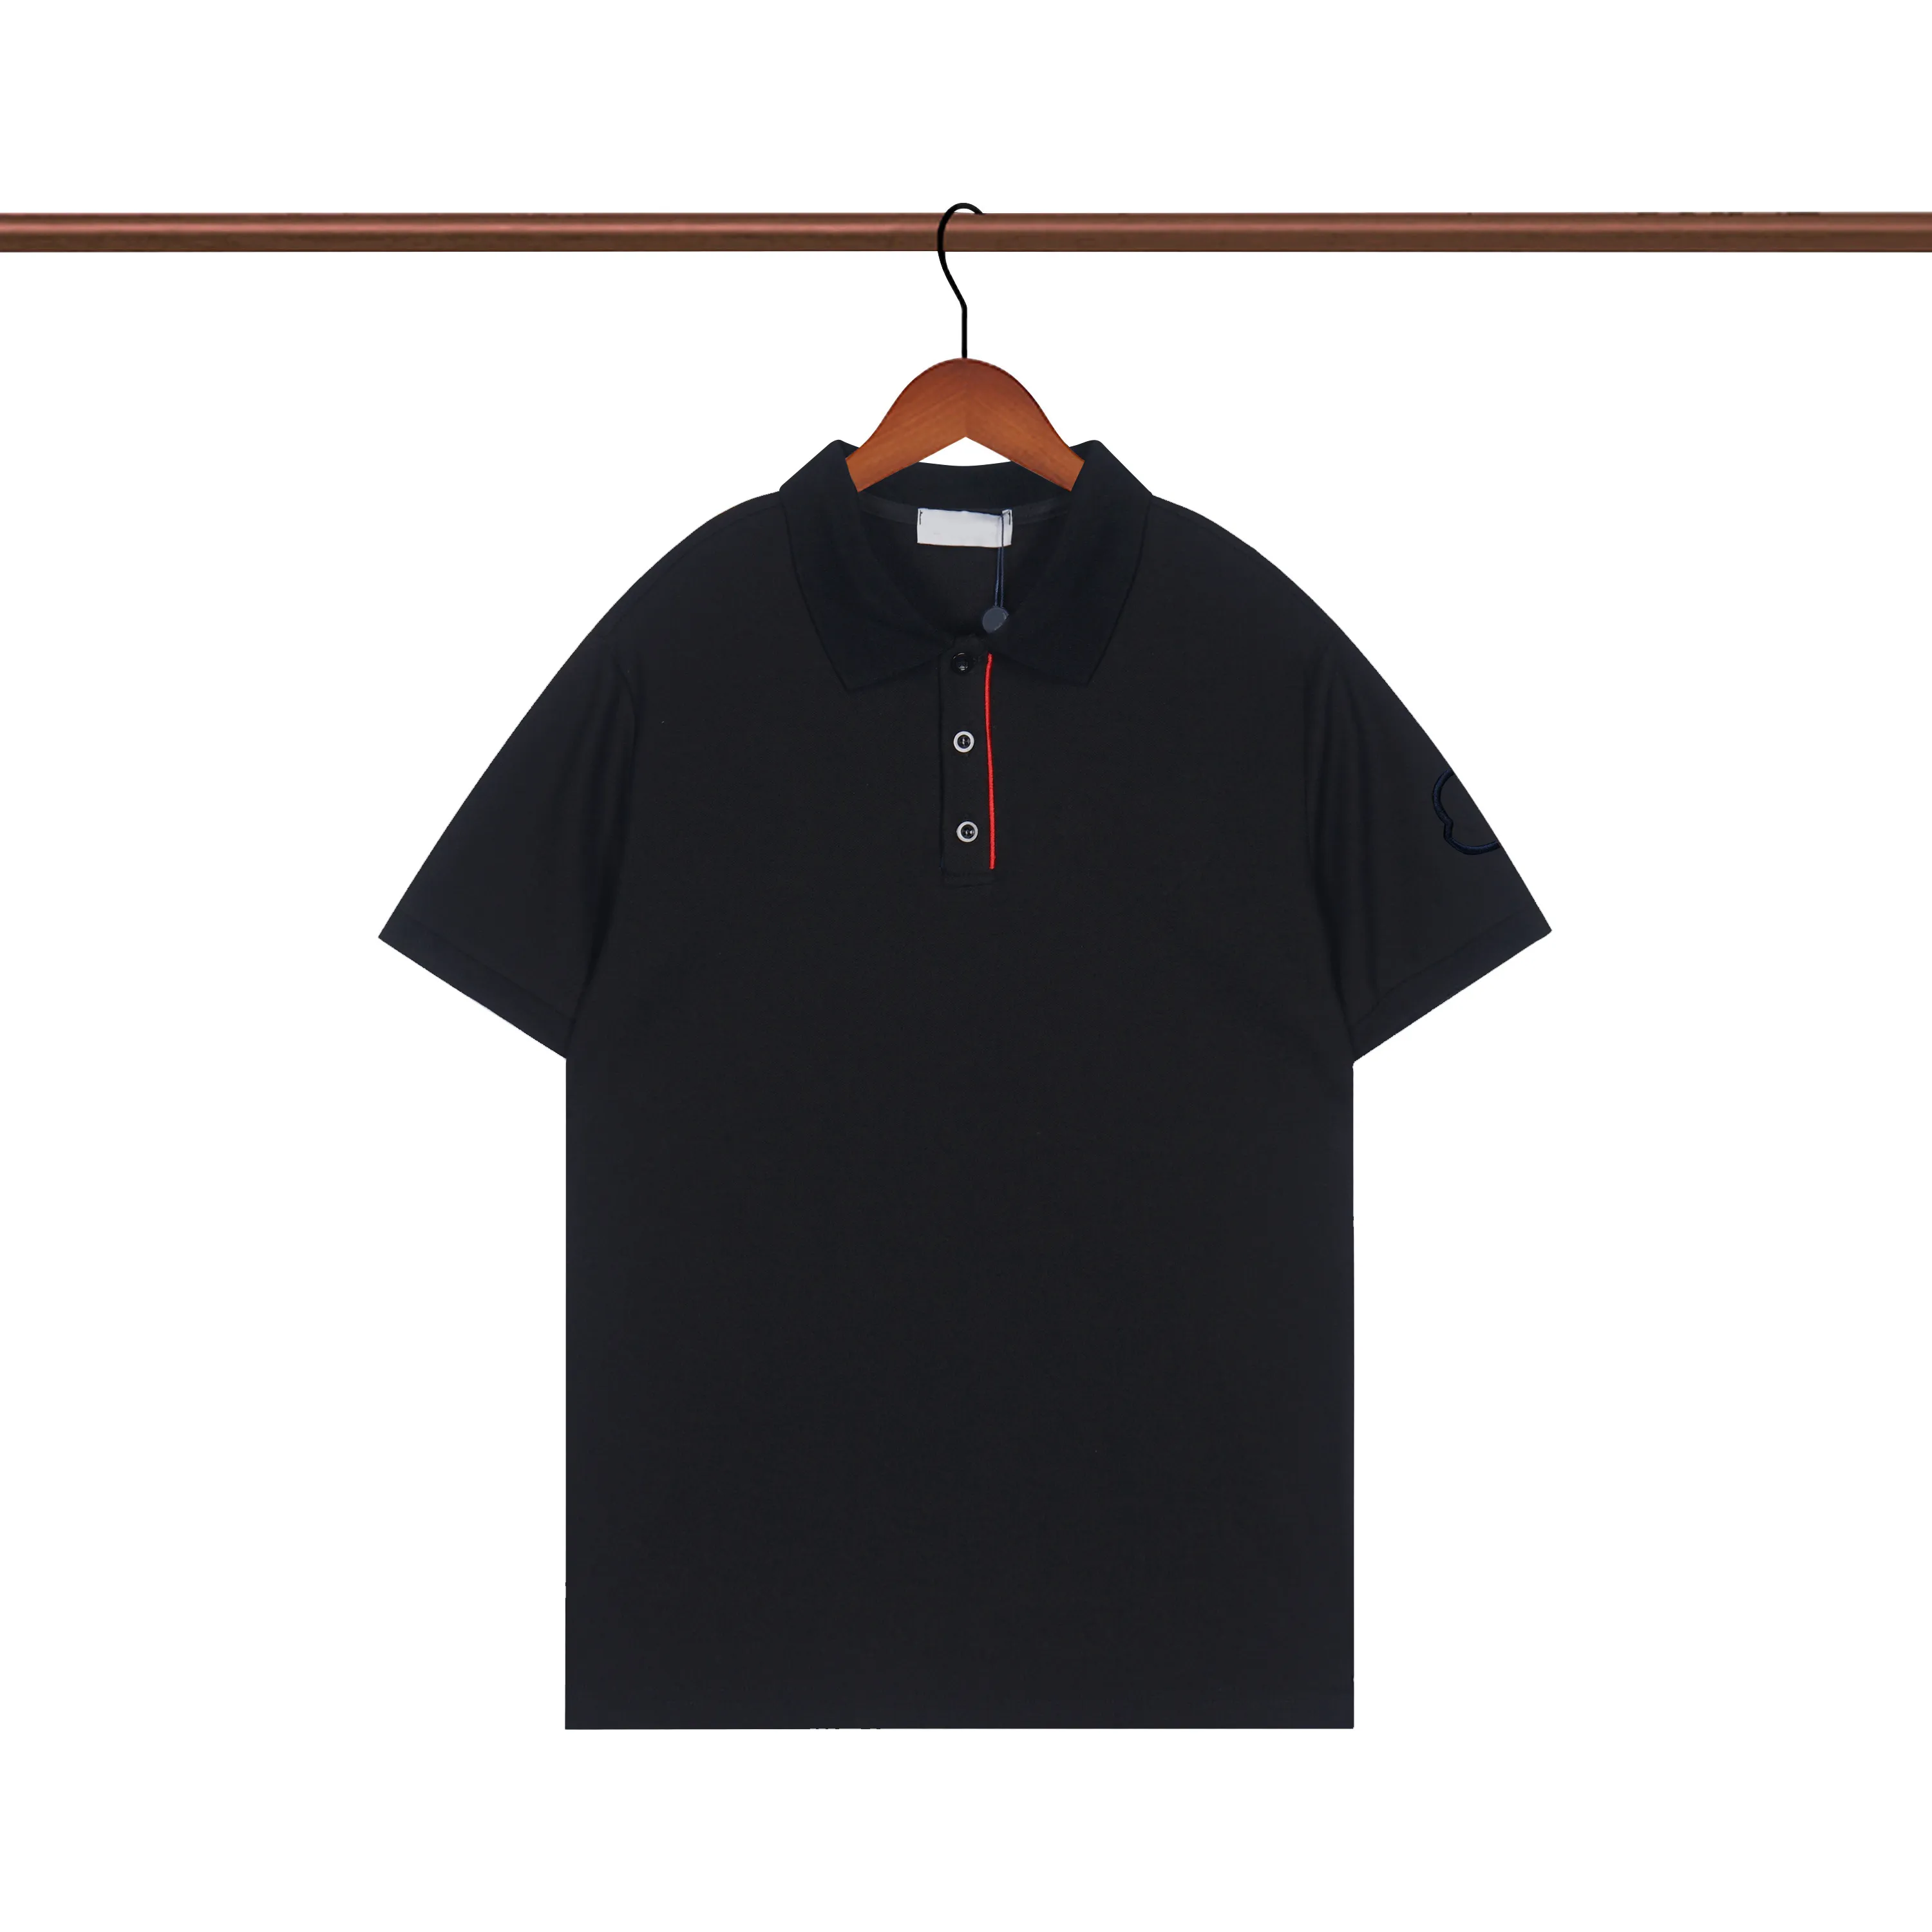 Designer Men's T-shirts Clothes Polos Shirts Men Short Sleeve T-shirt London New York Chicago Polop Shirt Dropshiping Hhigh Quality 689